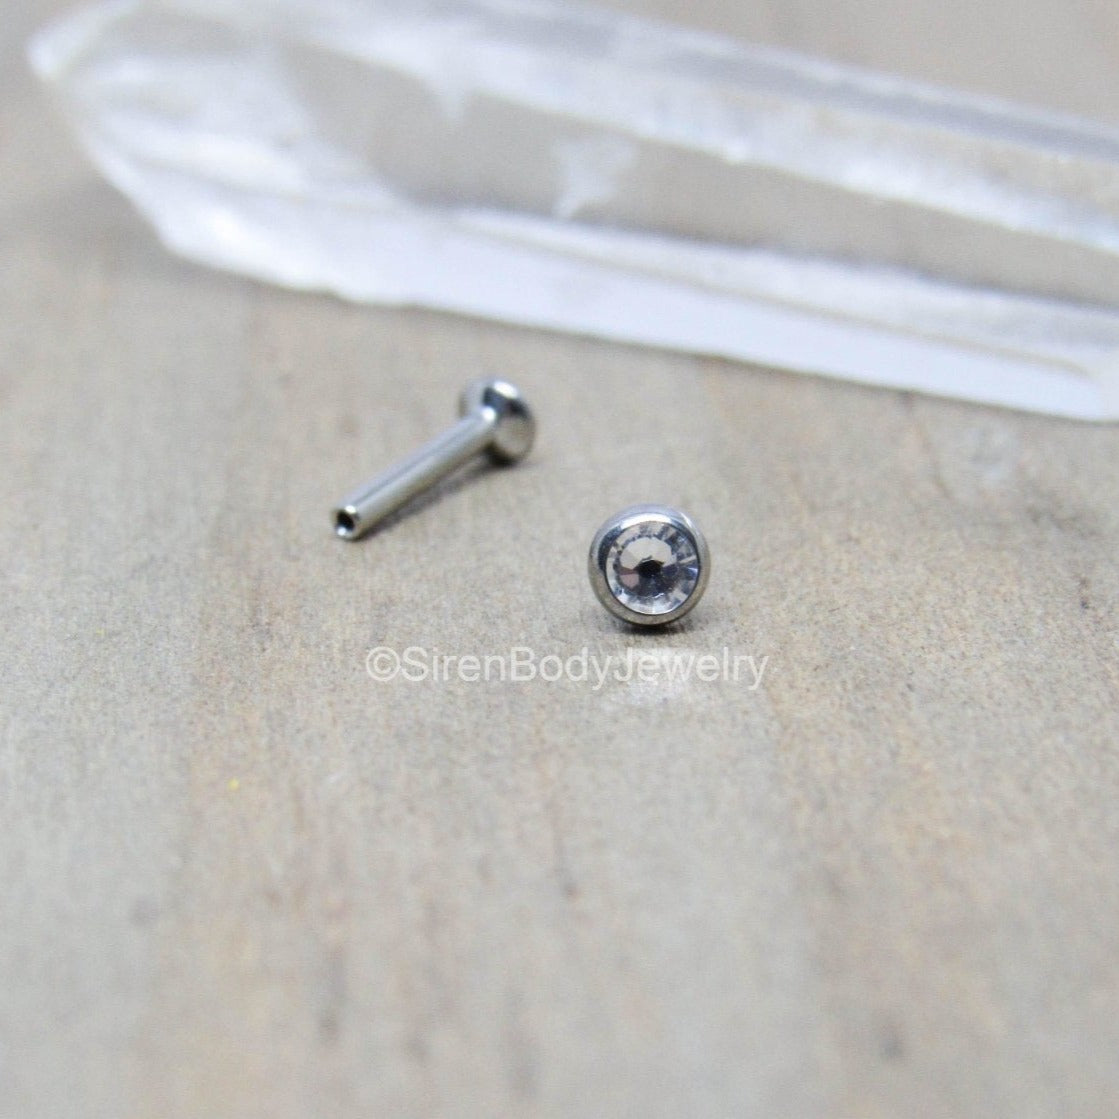 Threadless nose stud titanium 18g flat back labret 3mm Swarovski clear gemstone bezel set - SirenBodyJewelry